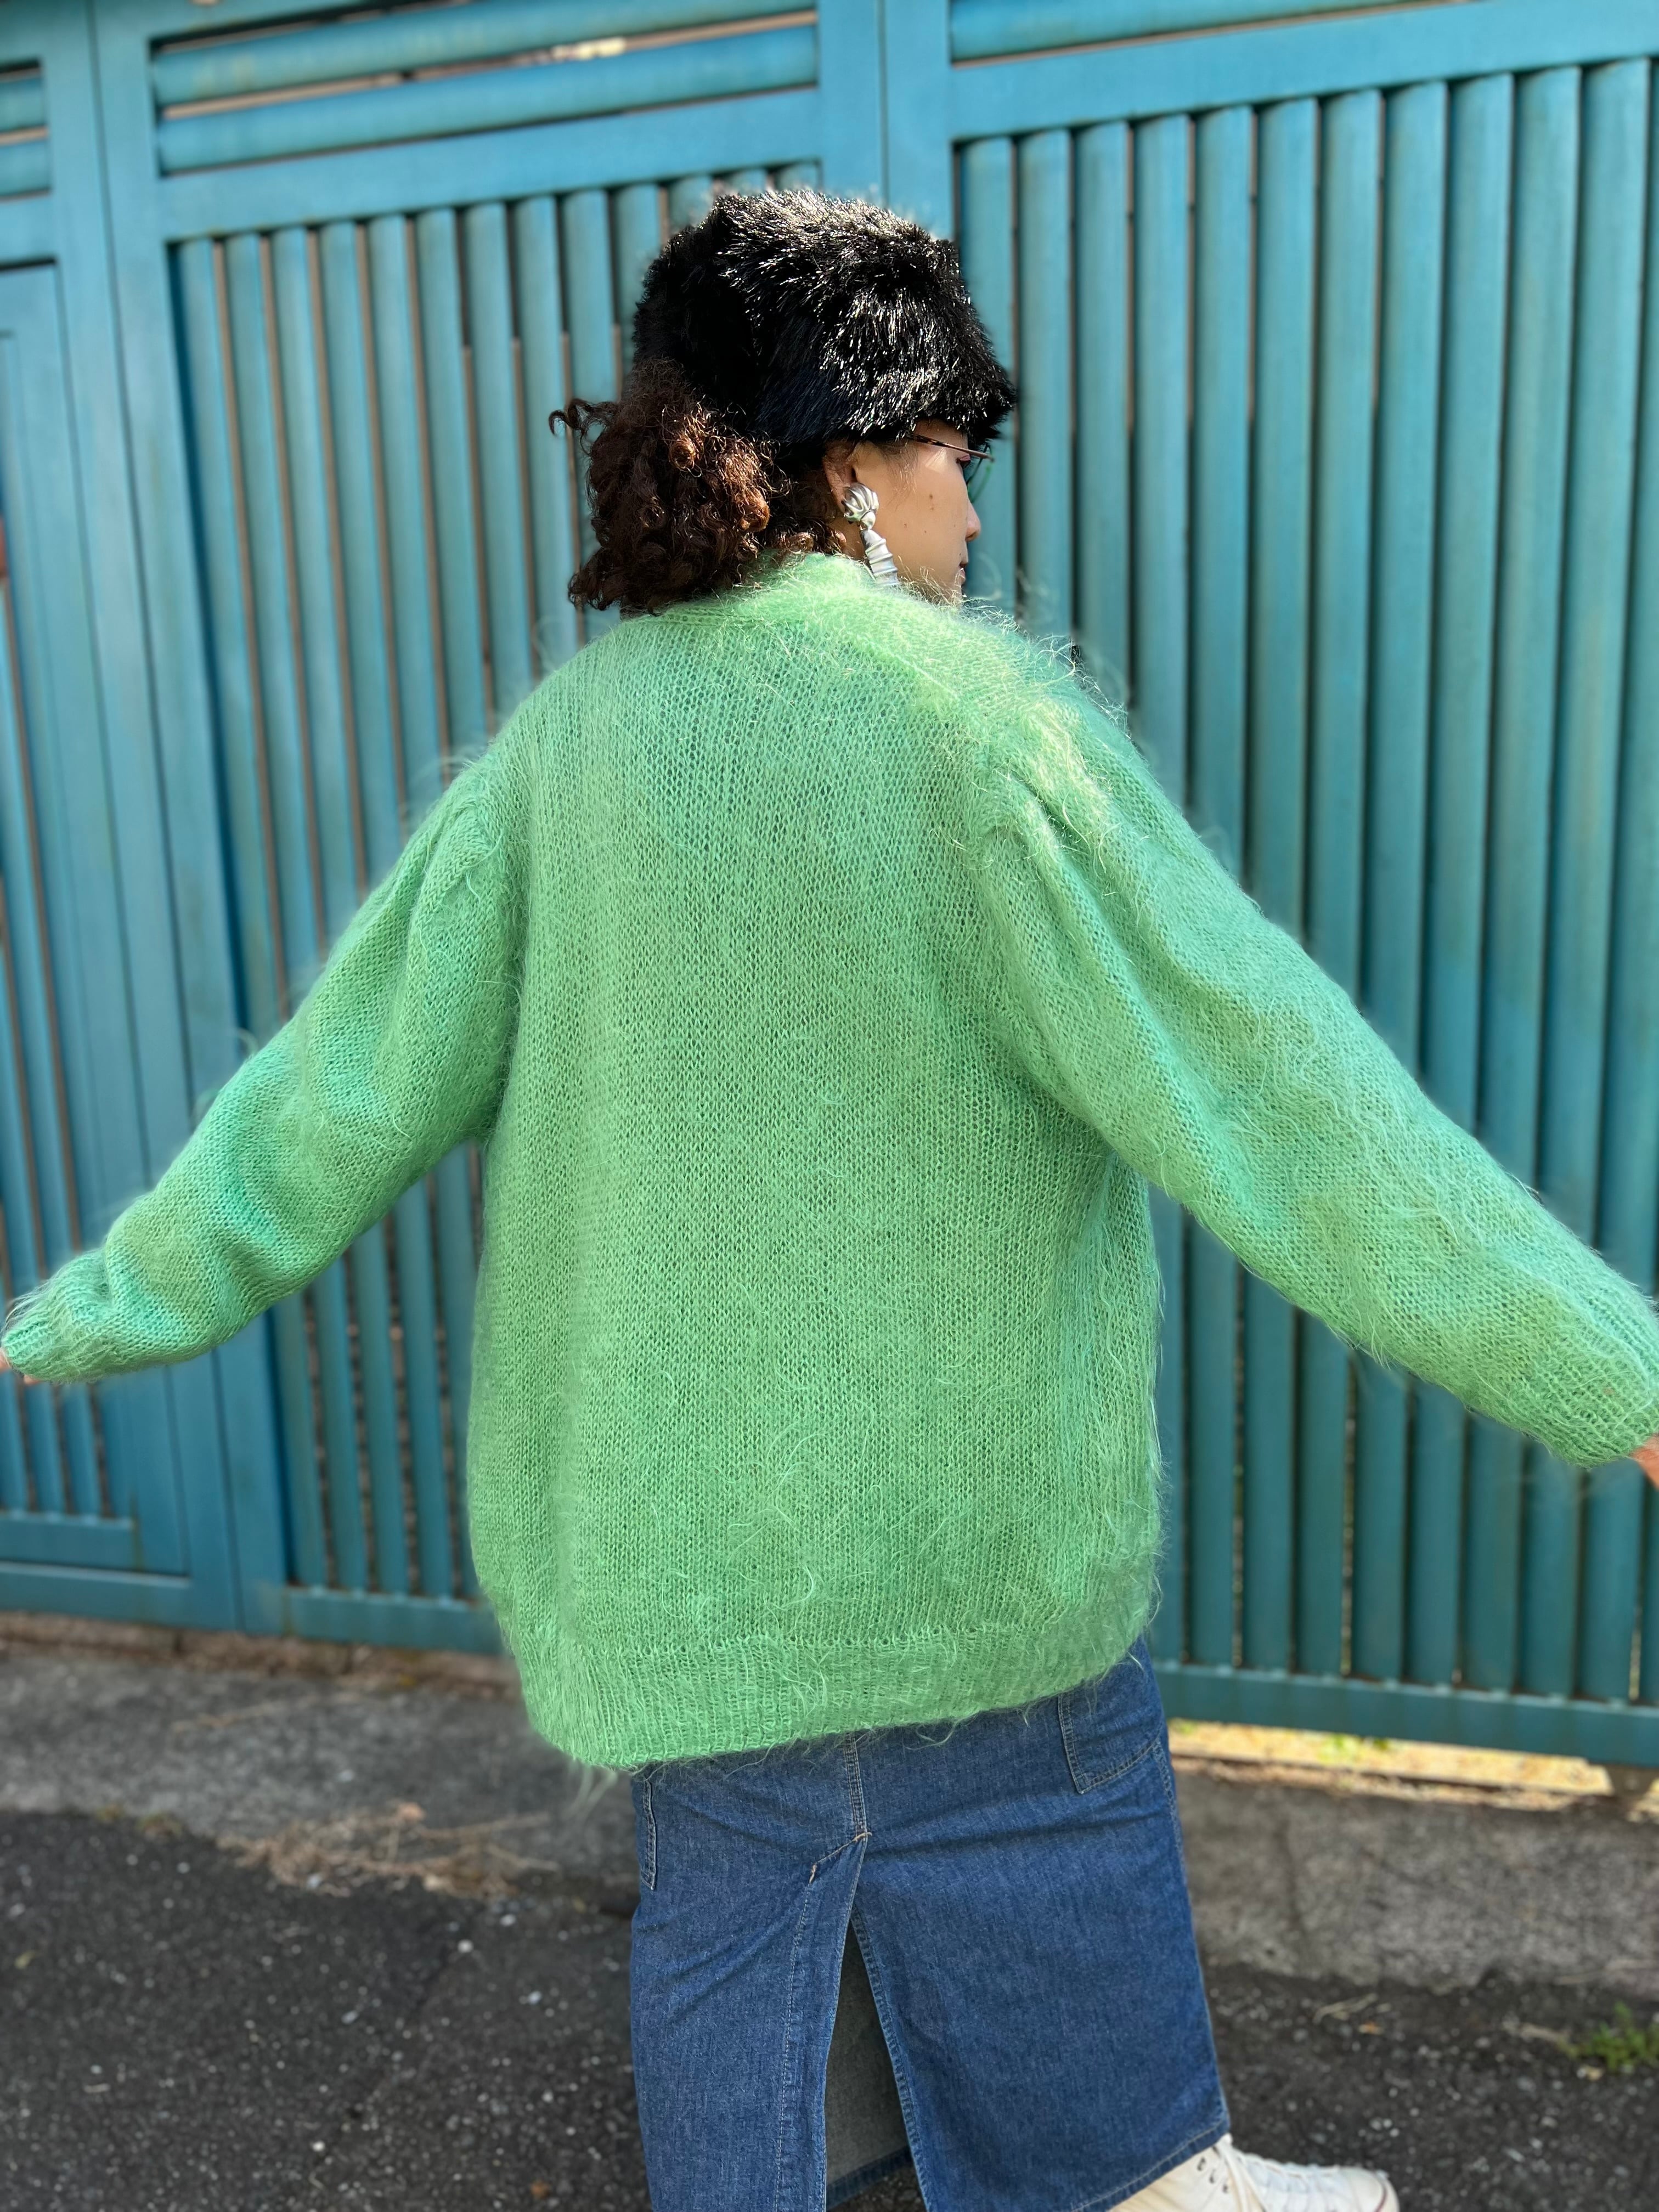 80s melon green × flower appliqué mohair knit coat ( ヴィンテージ